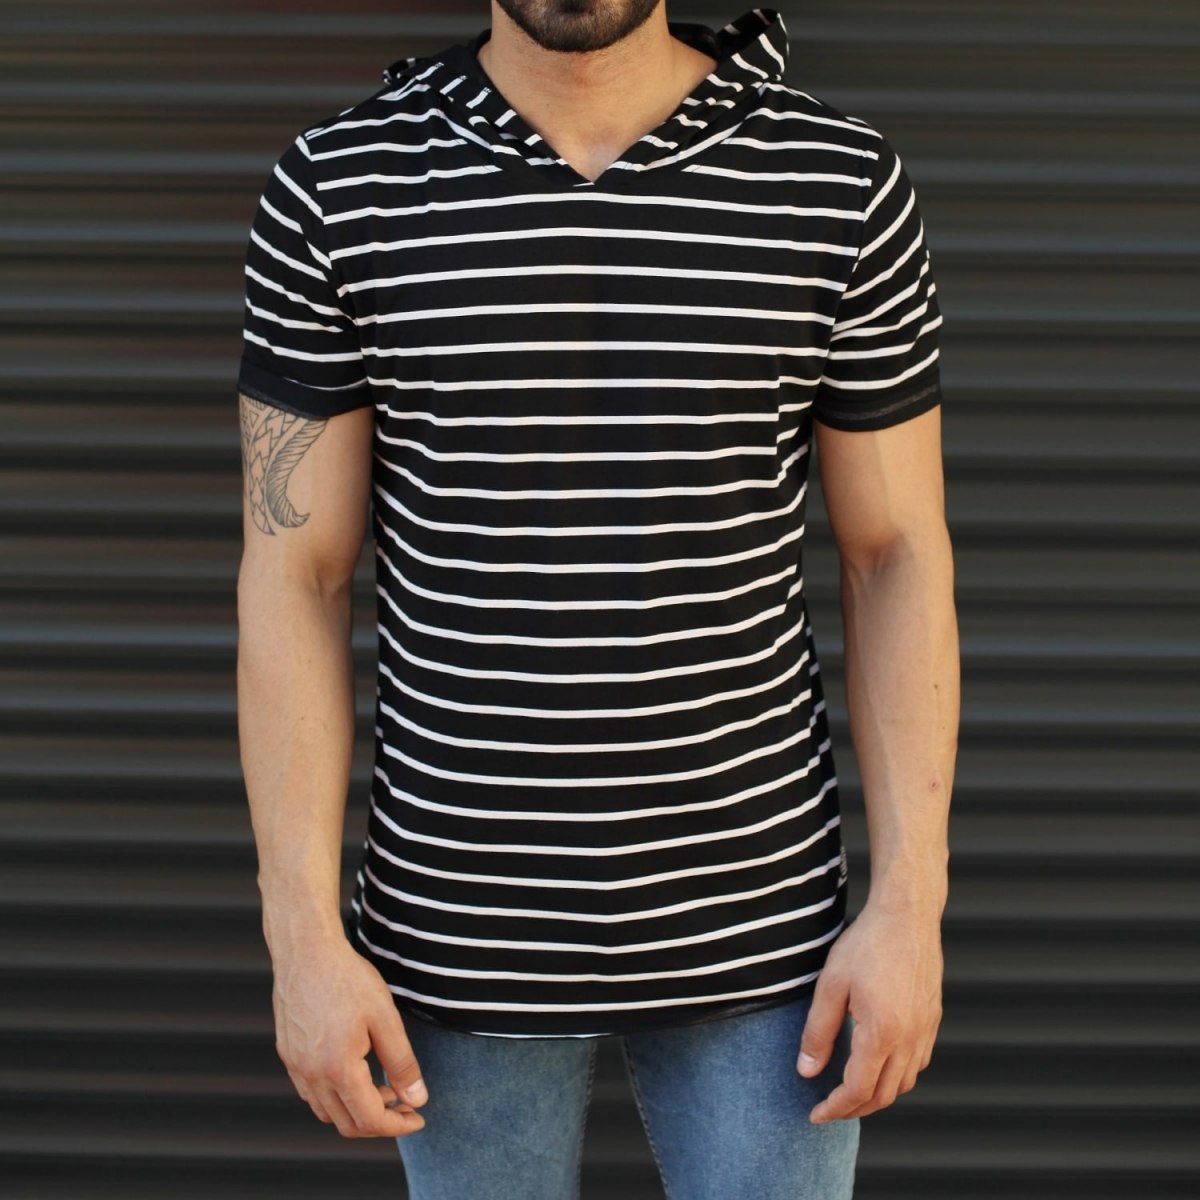 Men's Hooded Longline Striped T-Shirt Black - 1